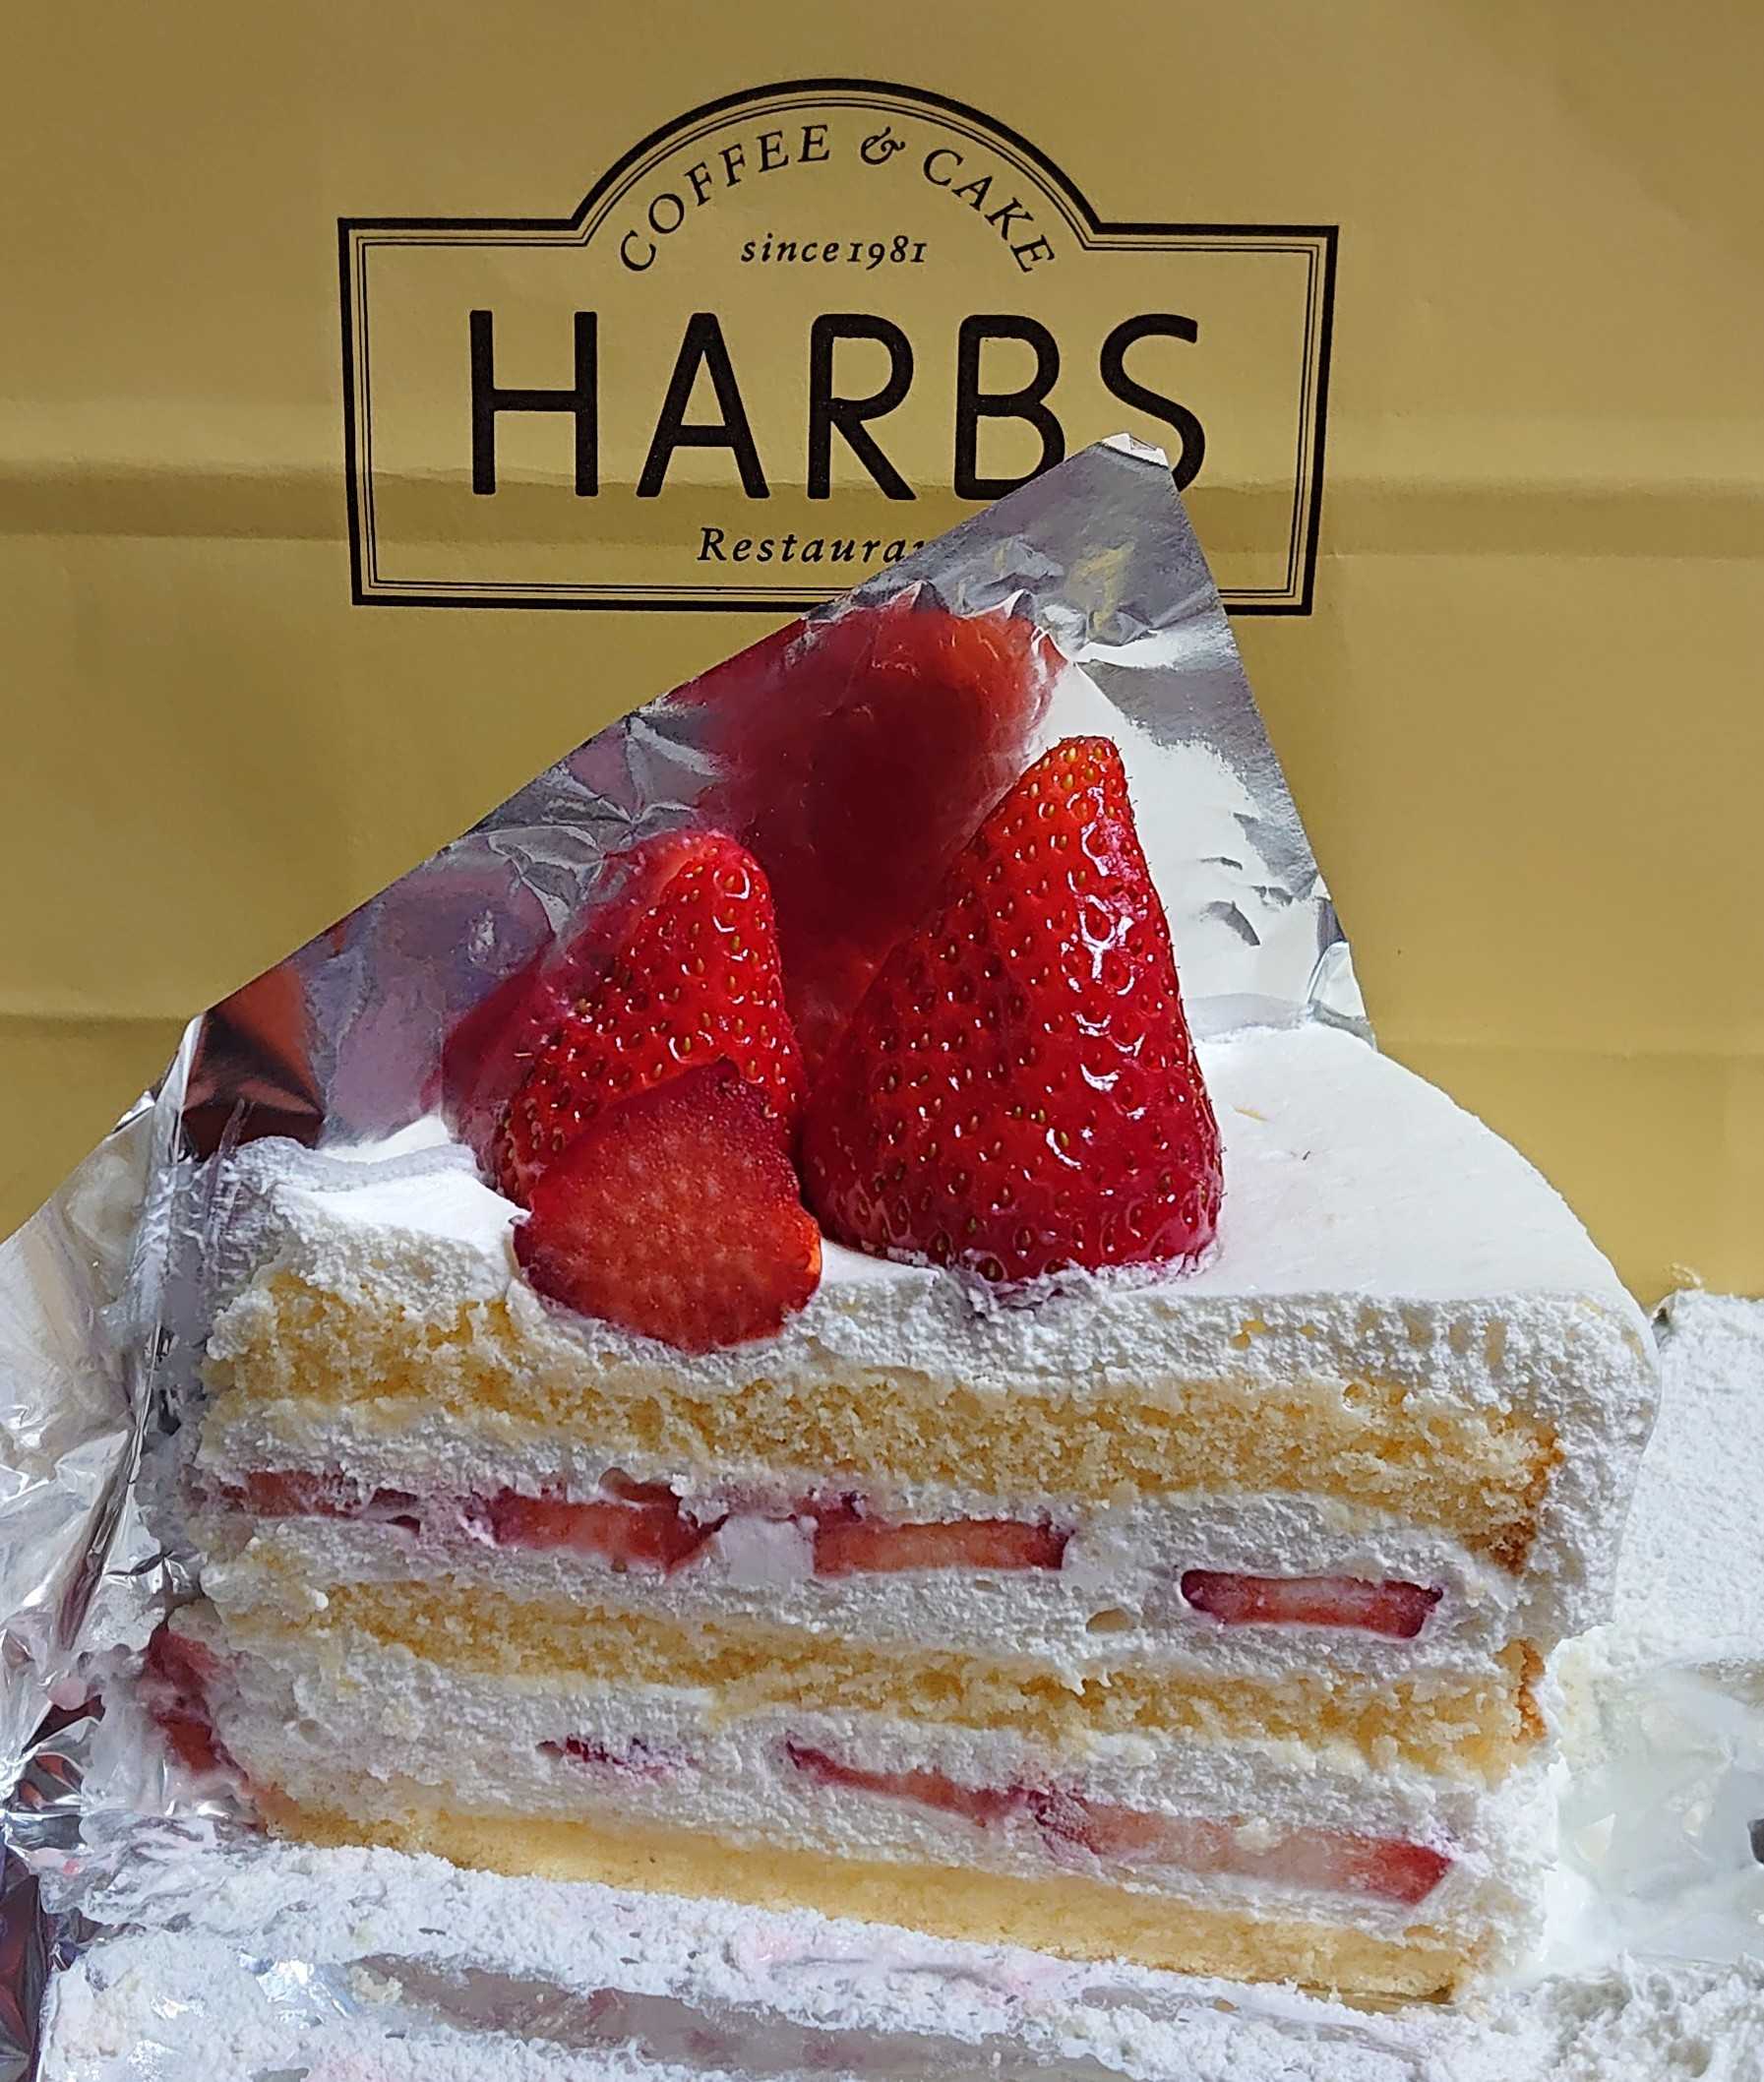 Harbs Fresh Cakes の記事一覧 目指せ チェッカー K R P のブログ 楽天ブログ